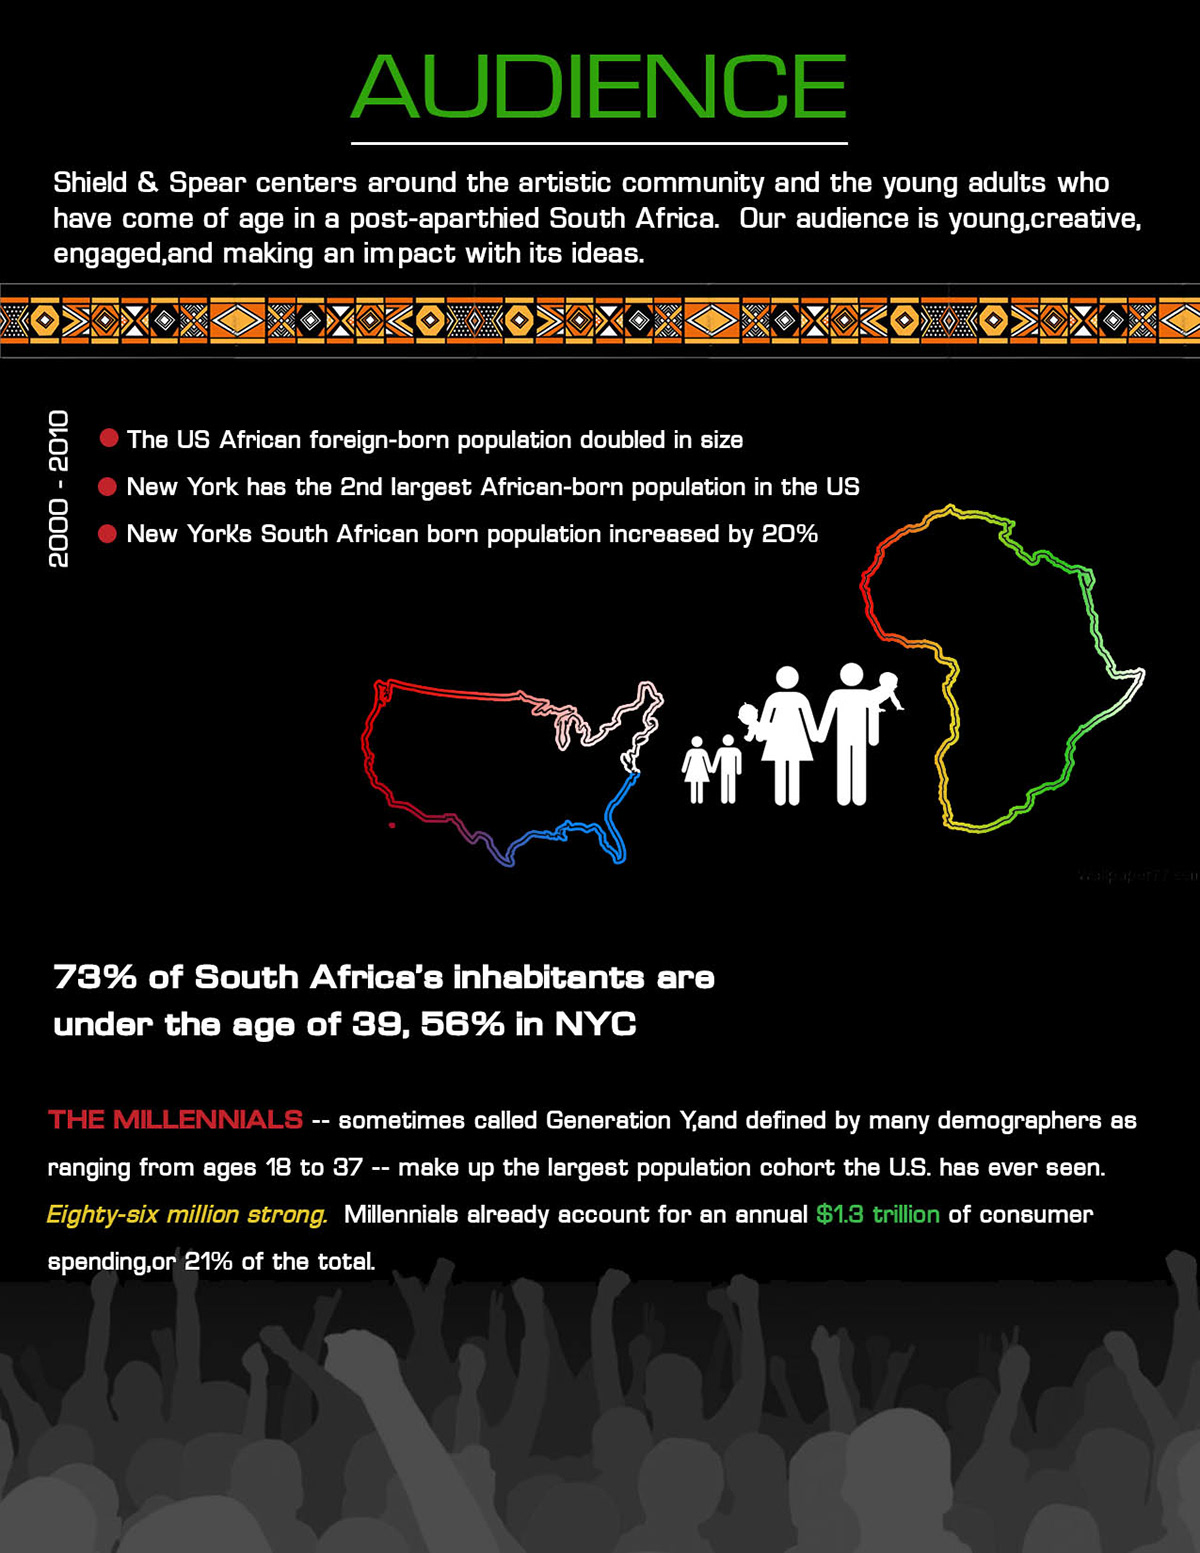 south africa Sponsorship Layout Documentary  shield & spear brett murray